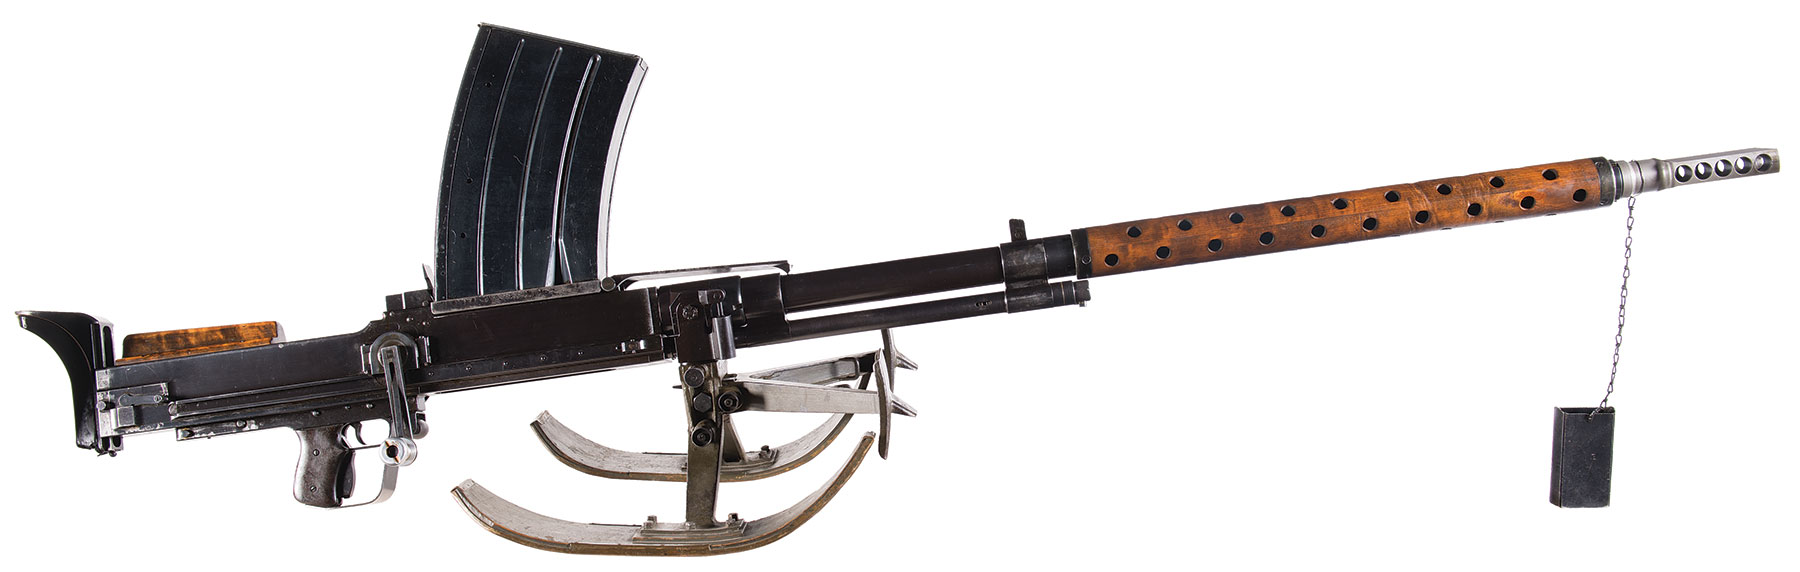 Lahti L-39 Anti-Tank Gun, Registered Destructive Device w/Case | Rock  Island Auction